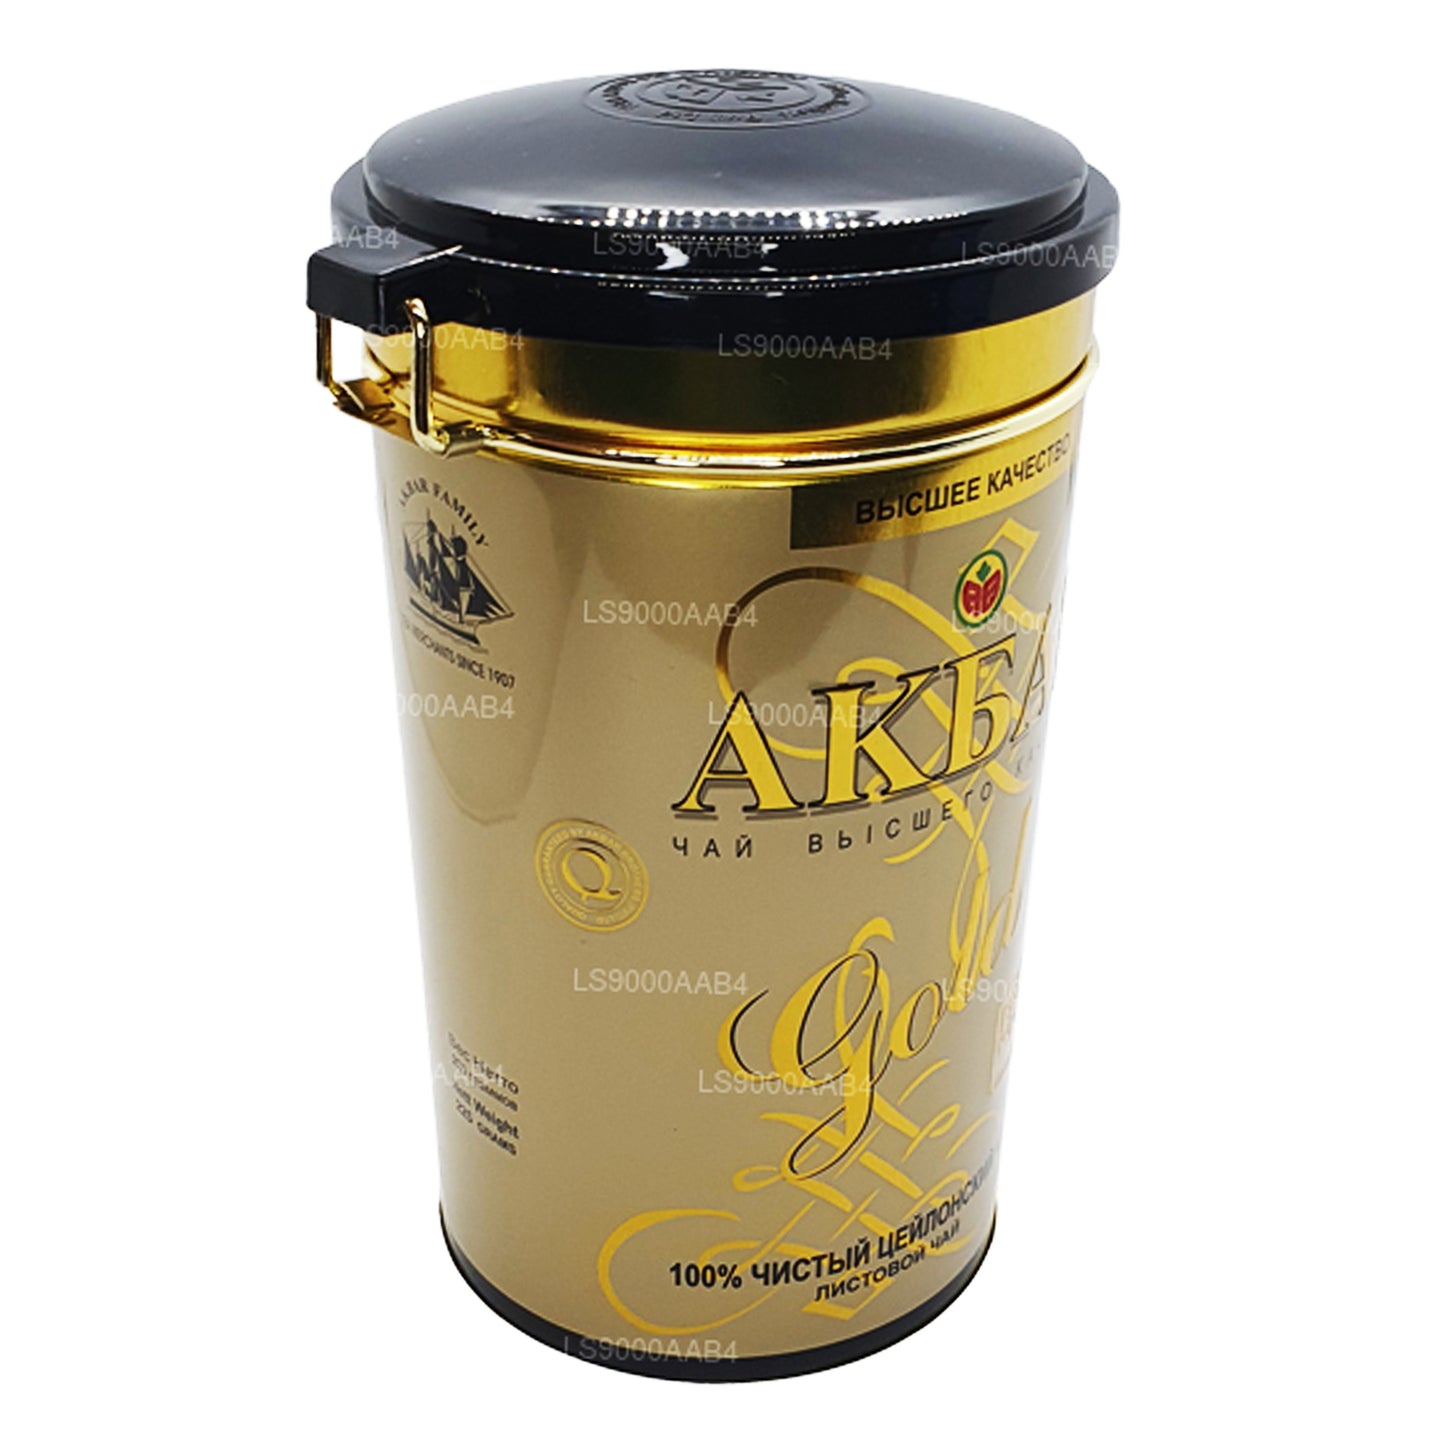 Akbar Gold Herbata liściasta (225g)